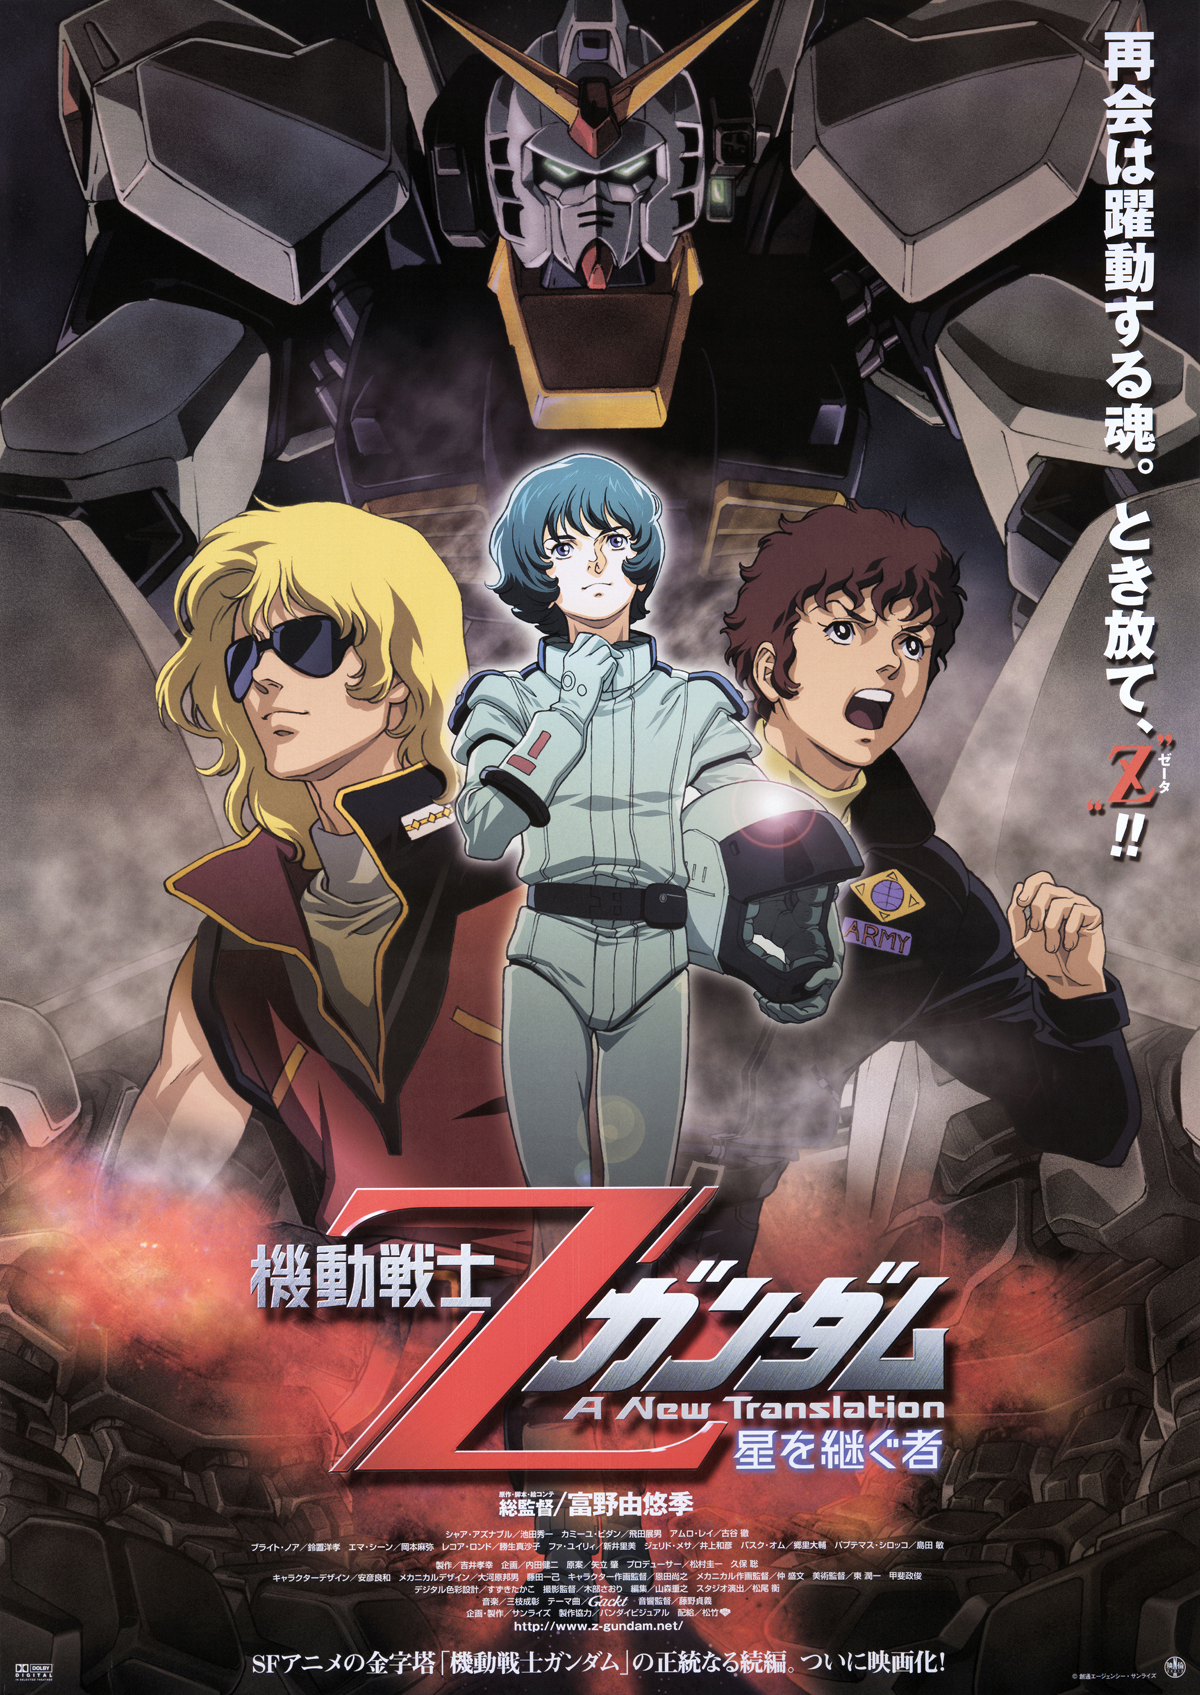 Mobile Suit Zeta Gundam: a New Translation Coll [Blu-ray] [Import]